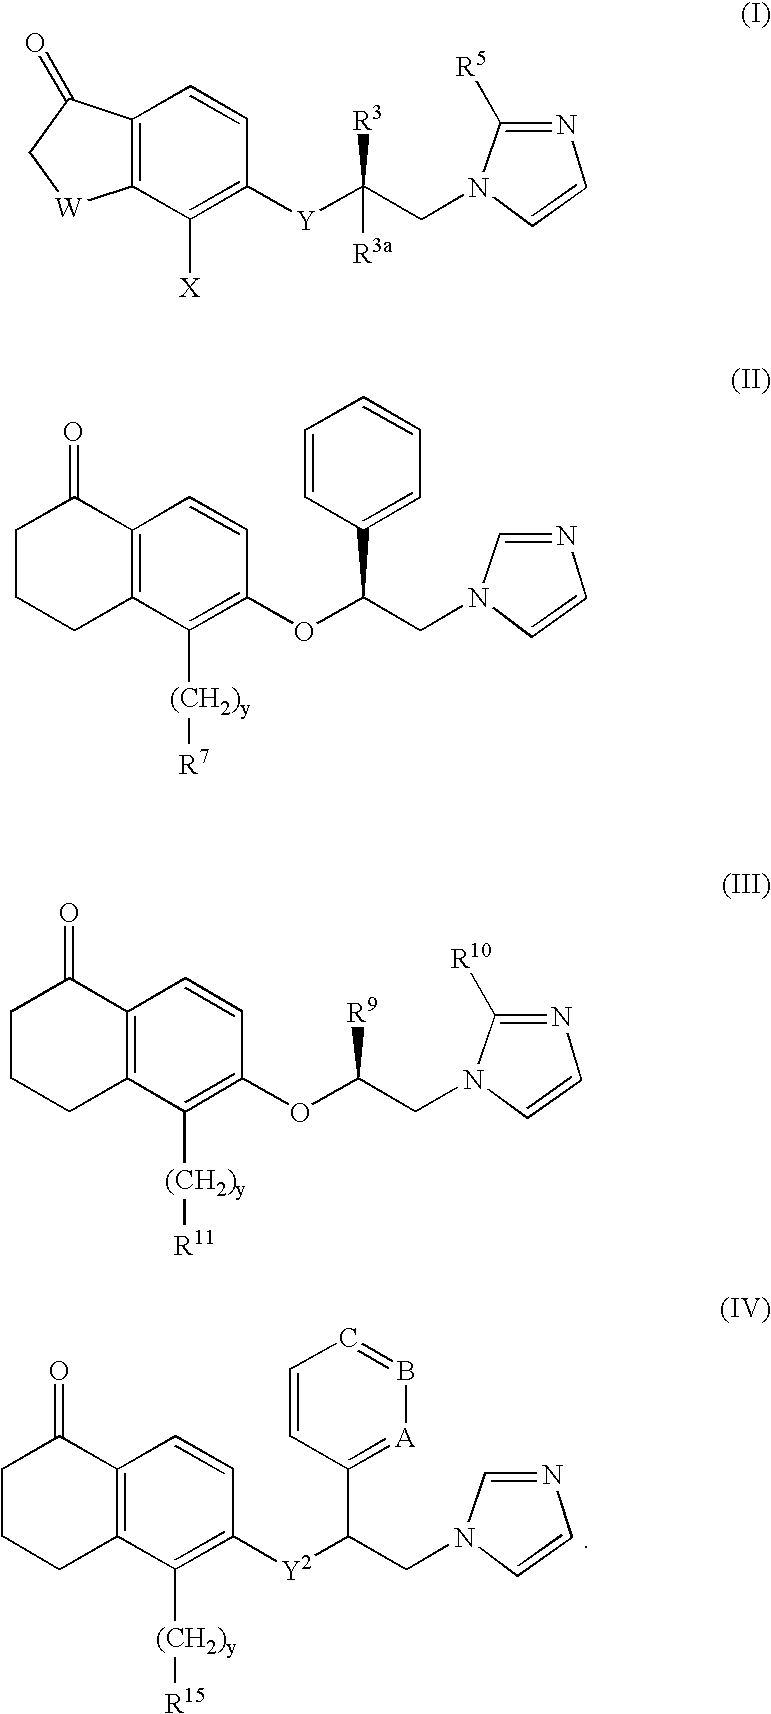 5-substituted tetralones as inhibitors of ras farnesyl transferase